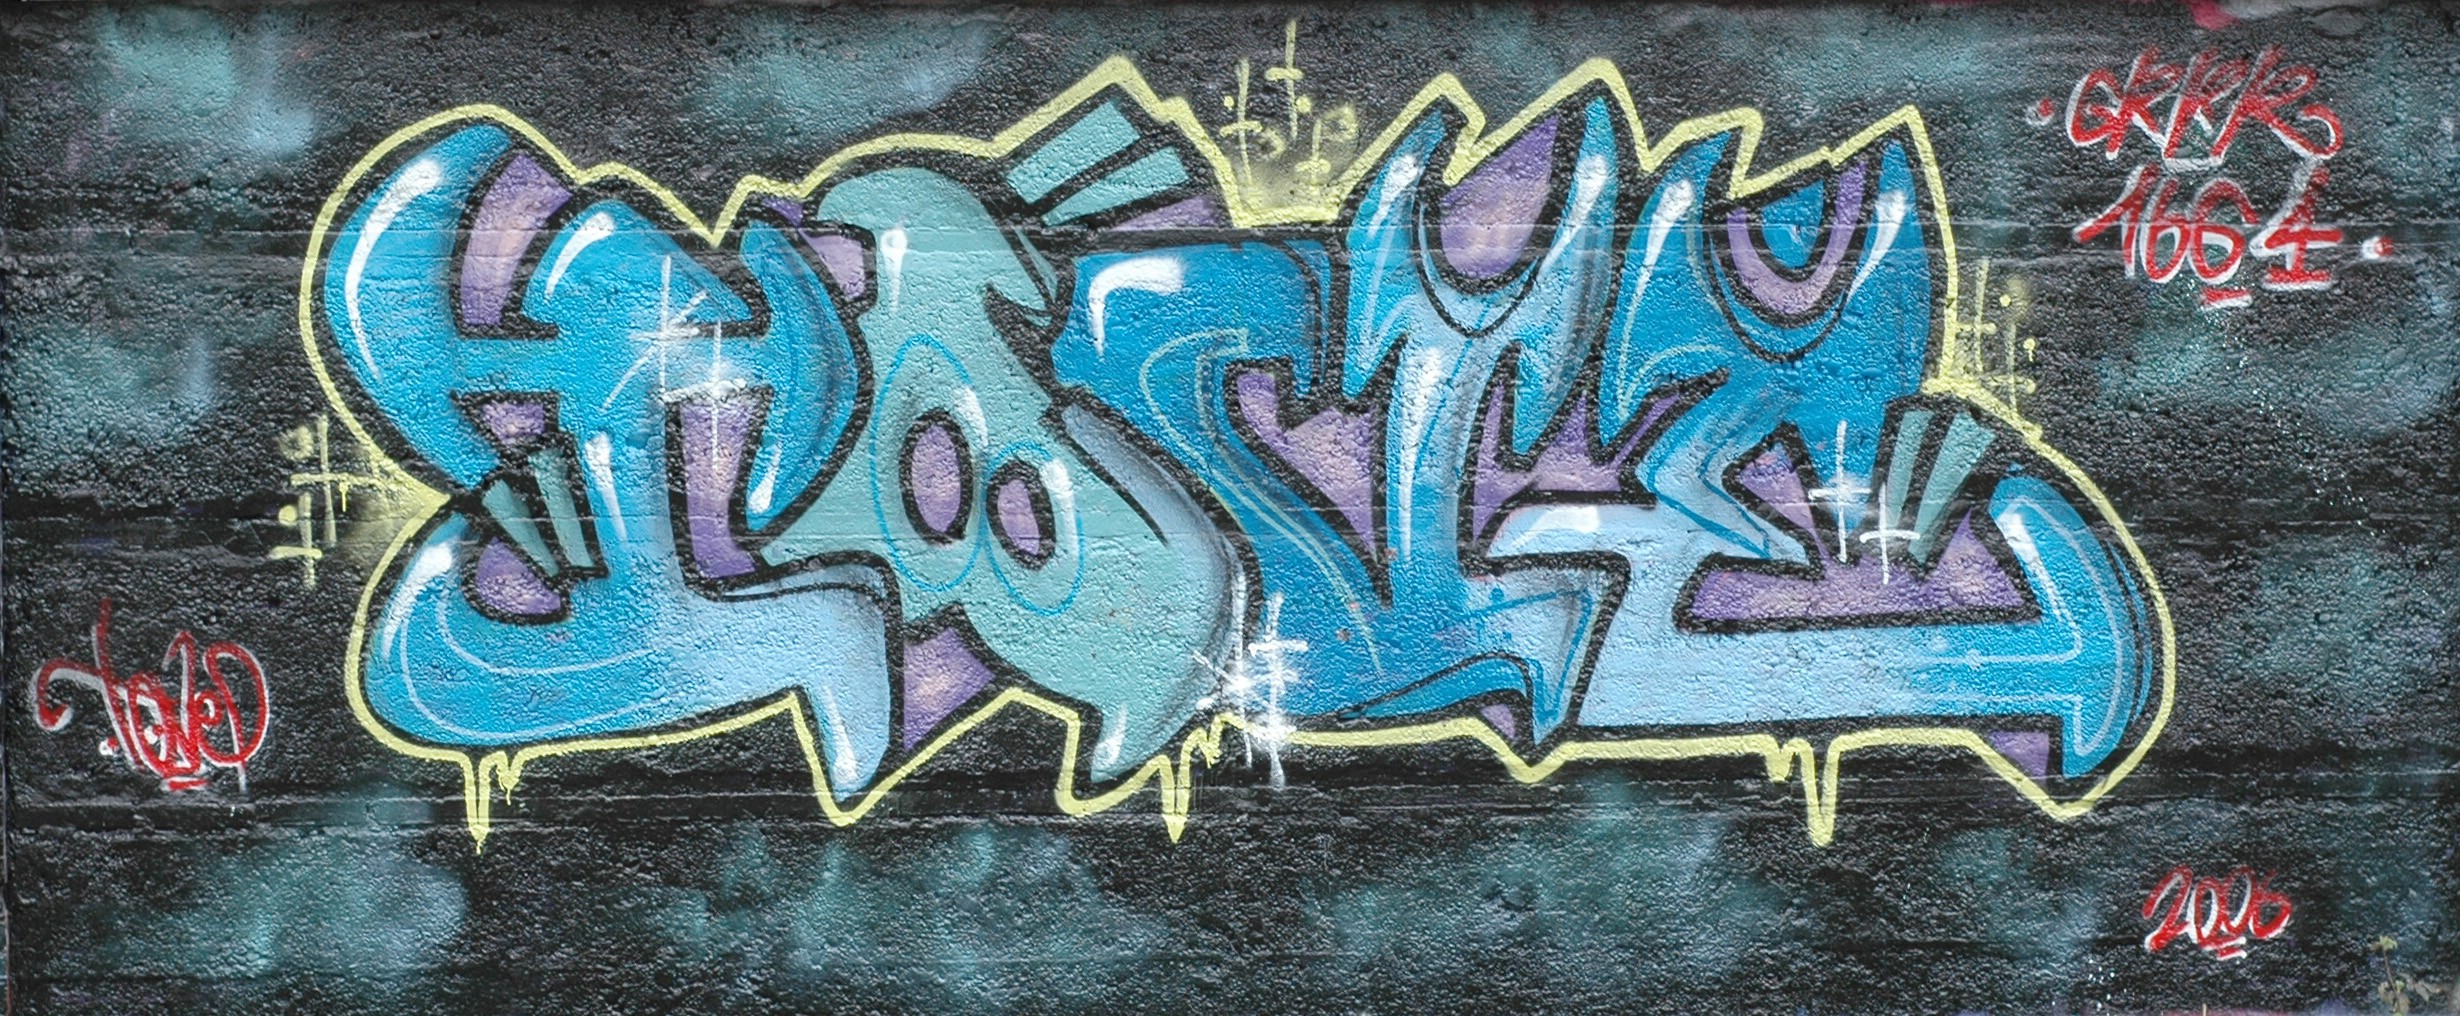 Лёша надпись графити